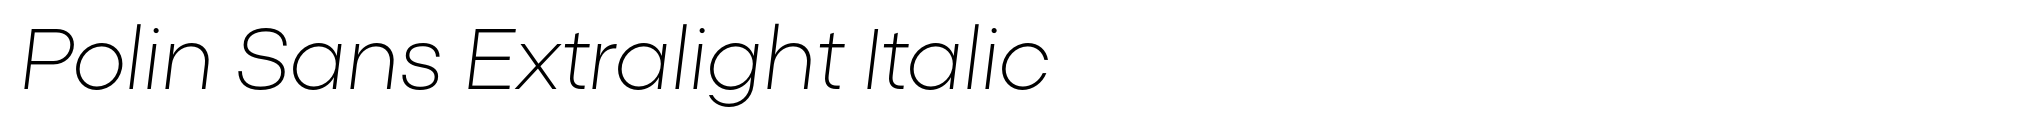 Polin Sans Extralight Italic image